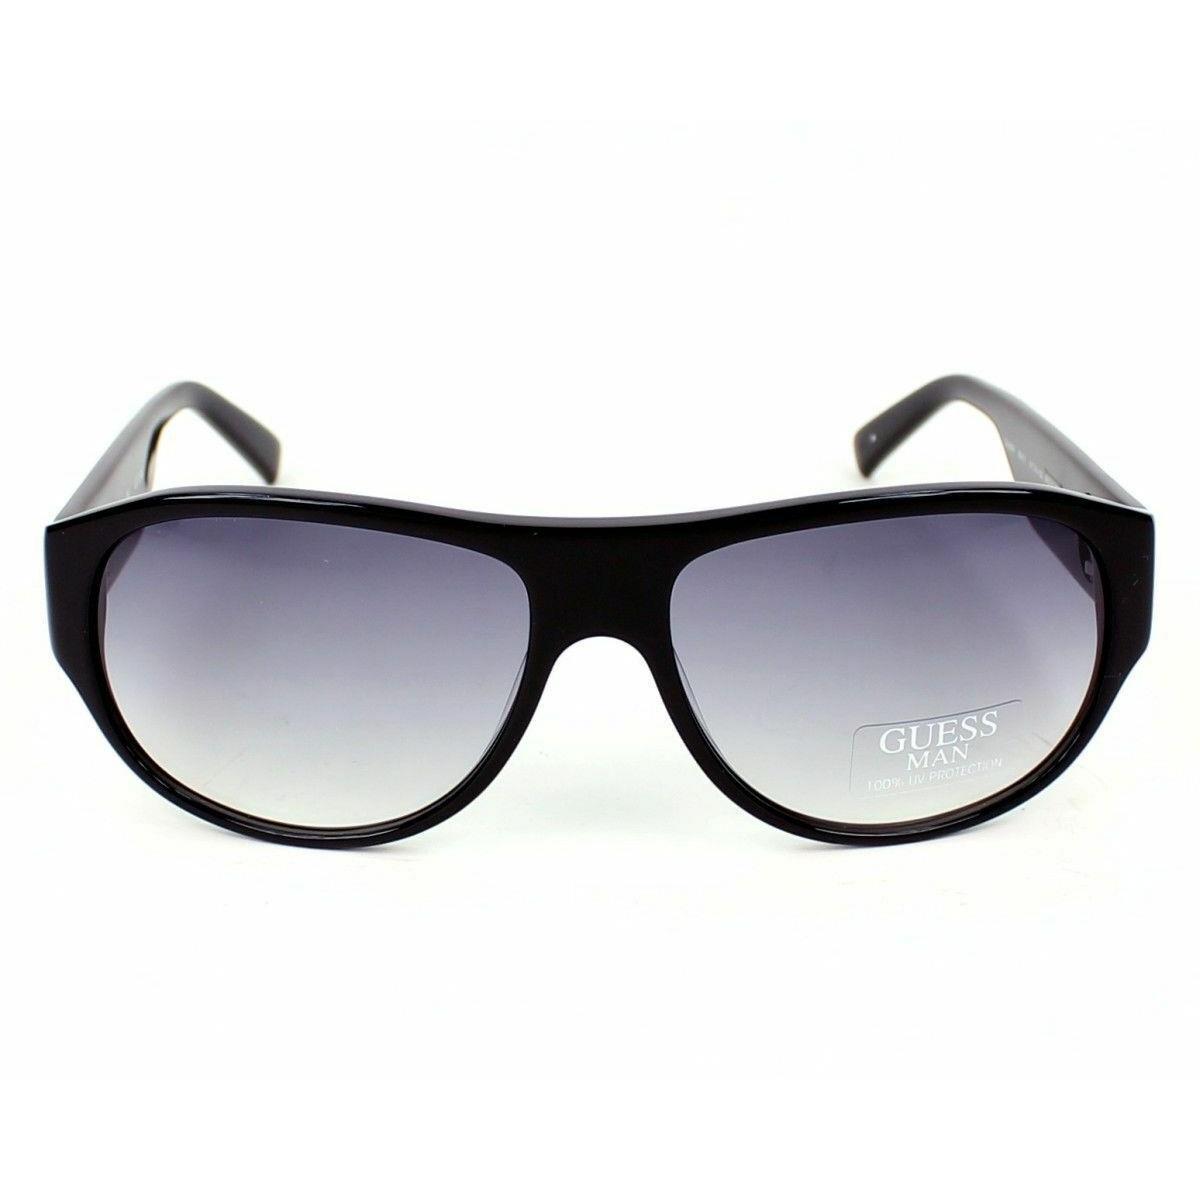 Guess Men Fashion Sunglasses Black Silver w/ Case GU6658 BLK-3